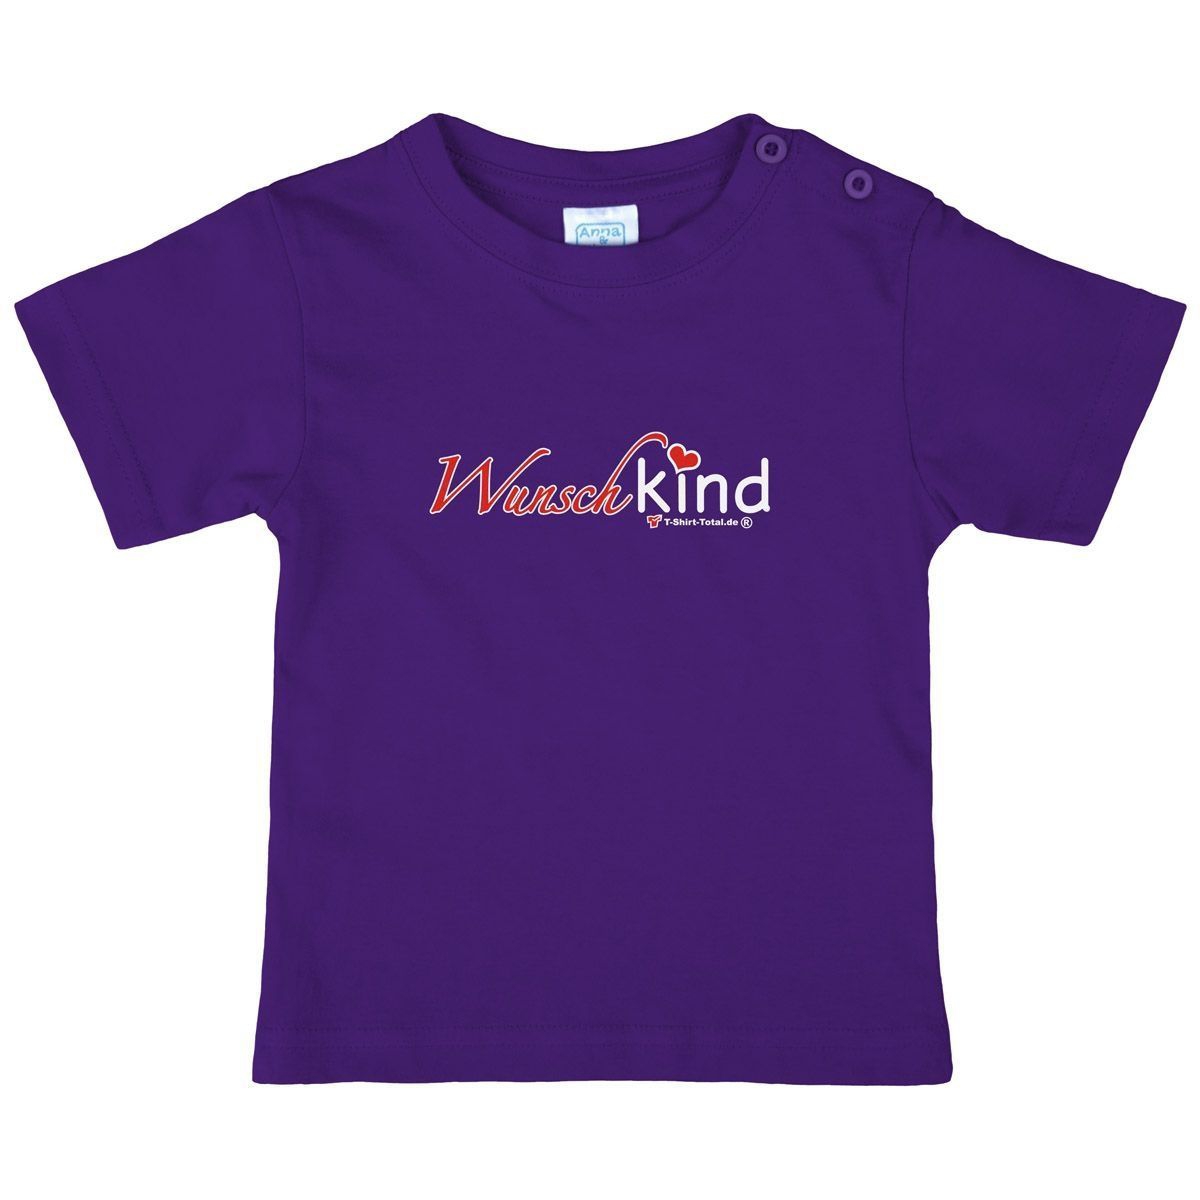 Wunschkind Kinder T-Shirt lila 56 / 62